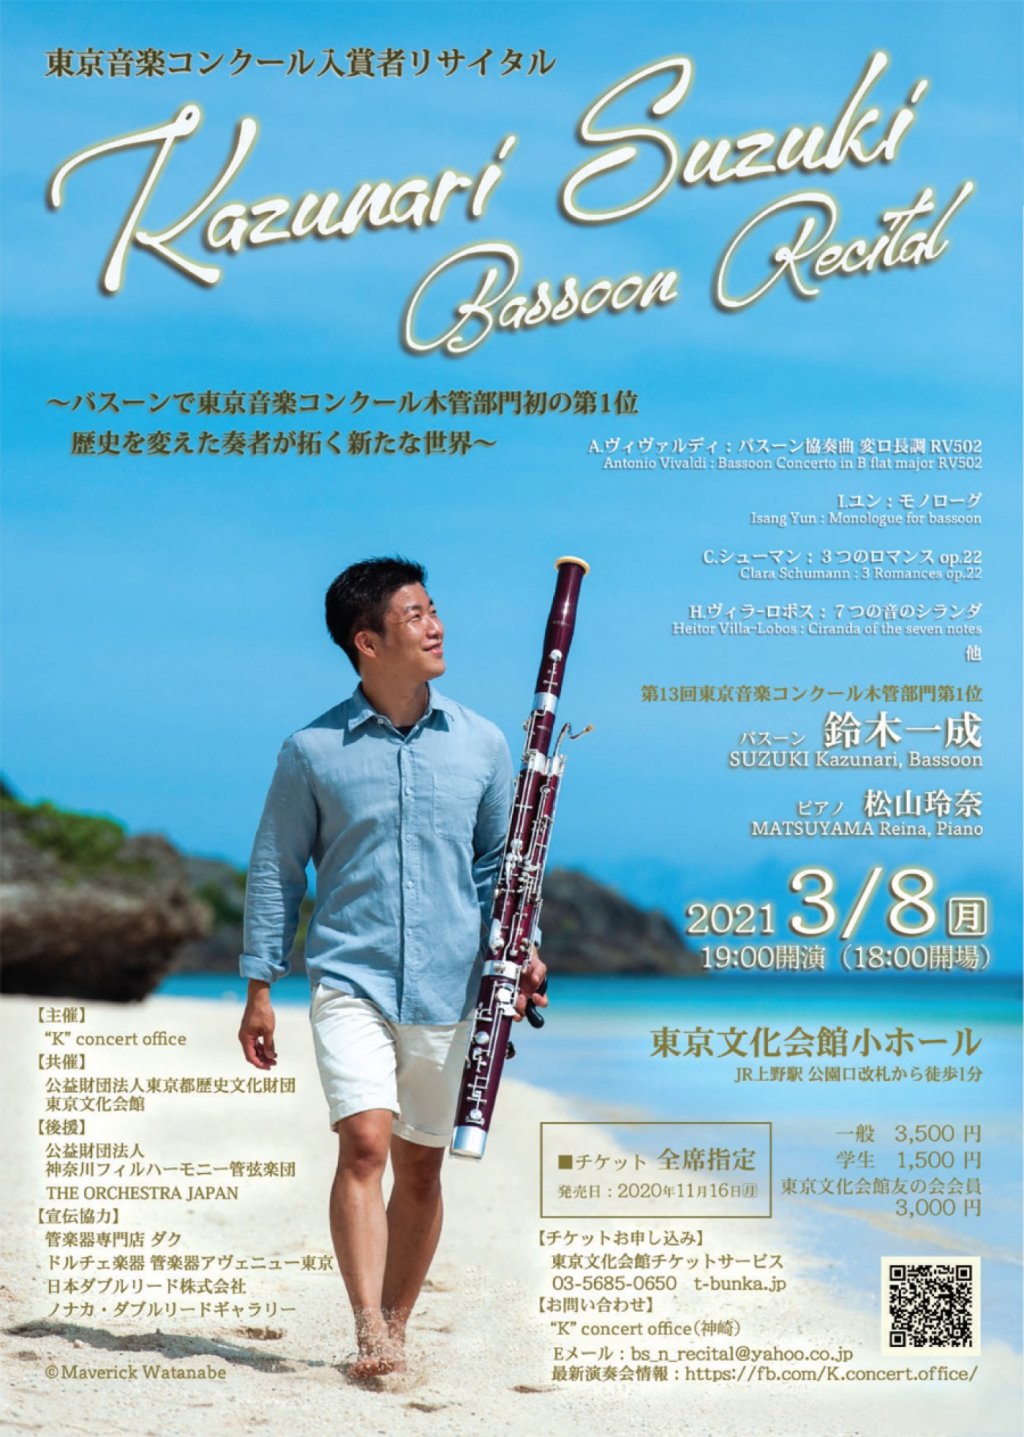 Kazunari Suzuki Bassoon Recital